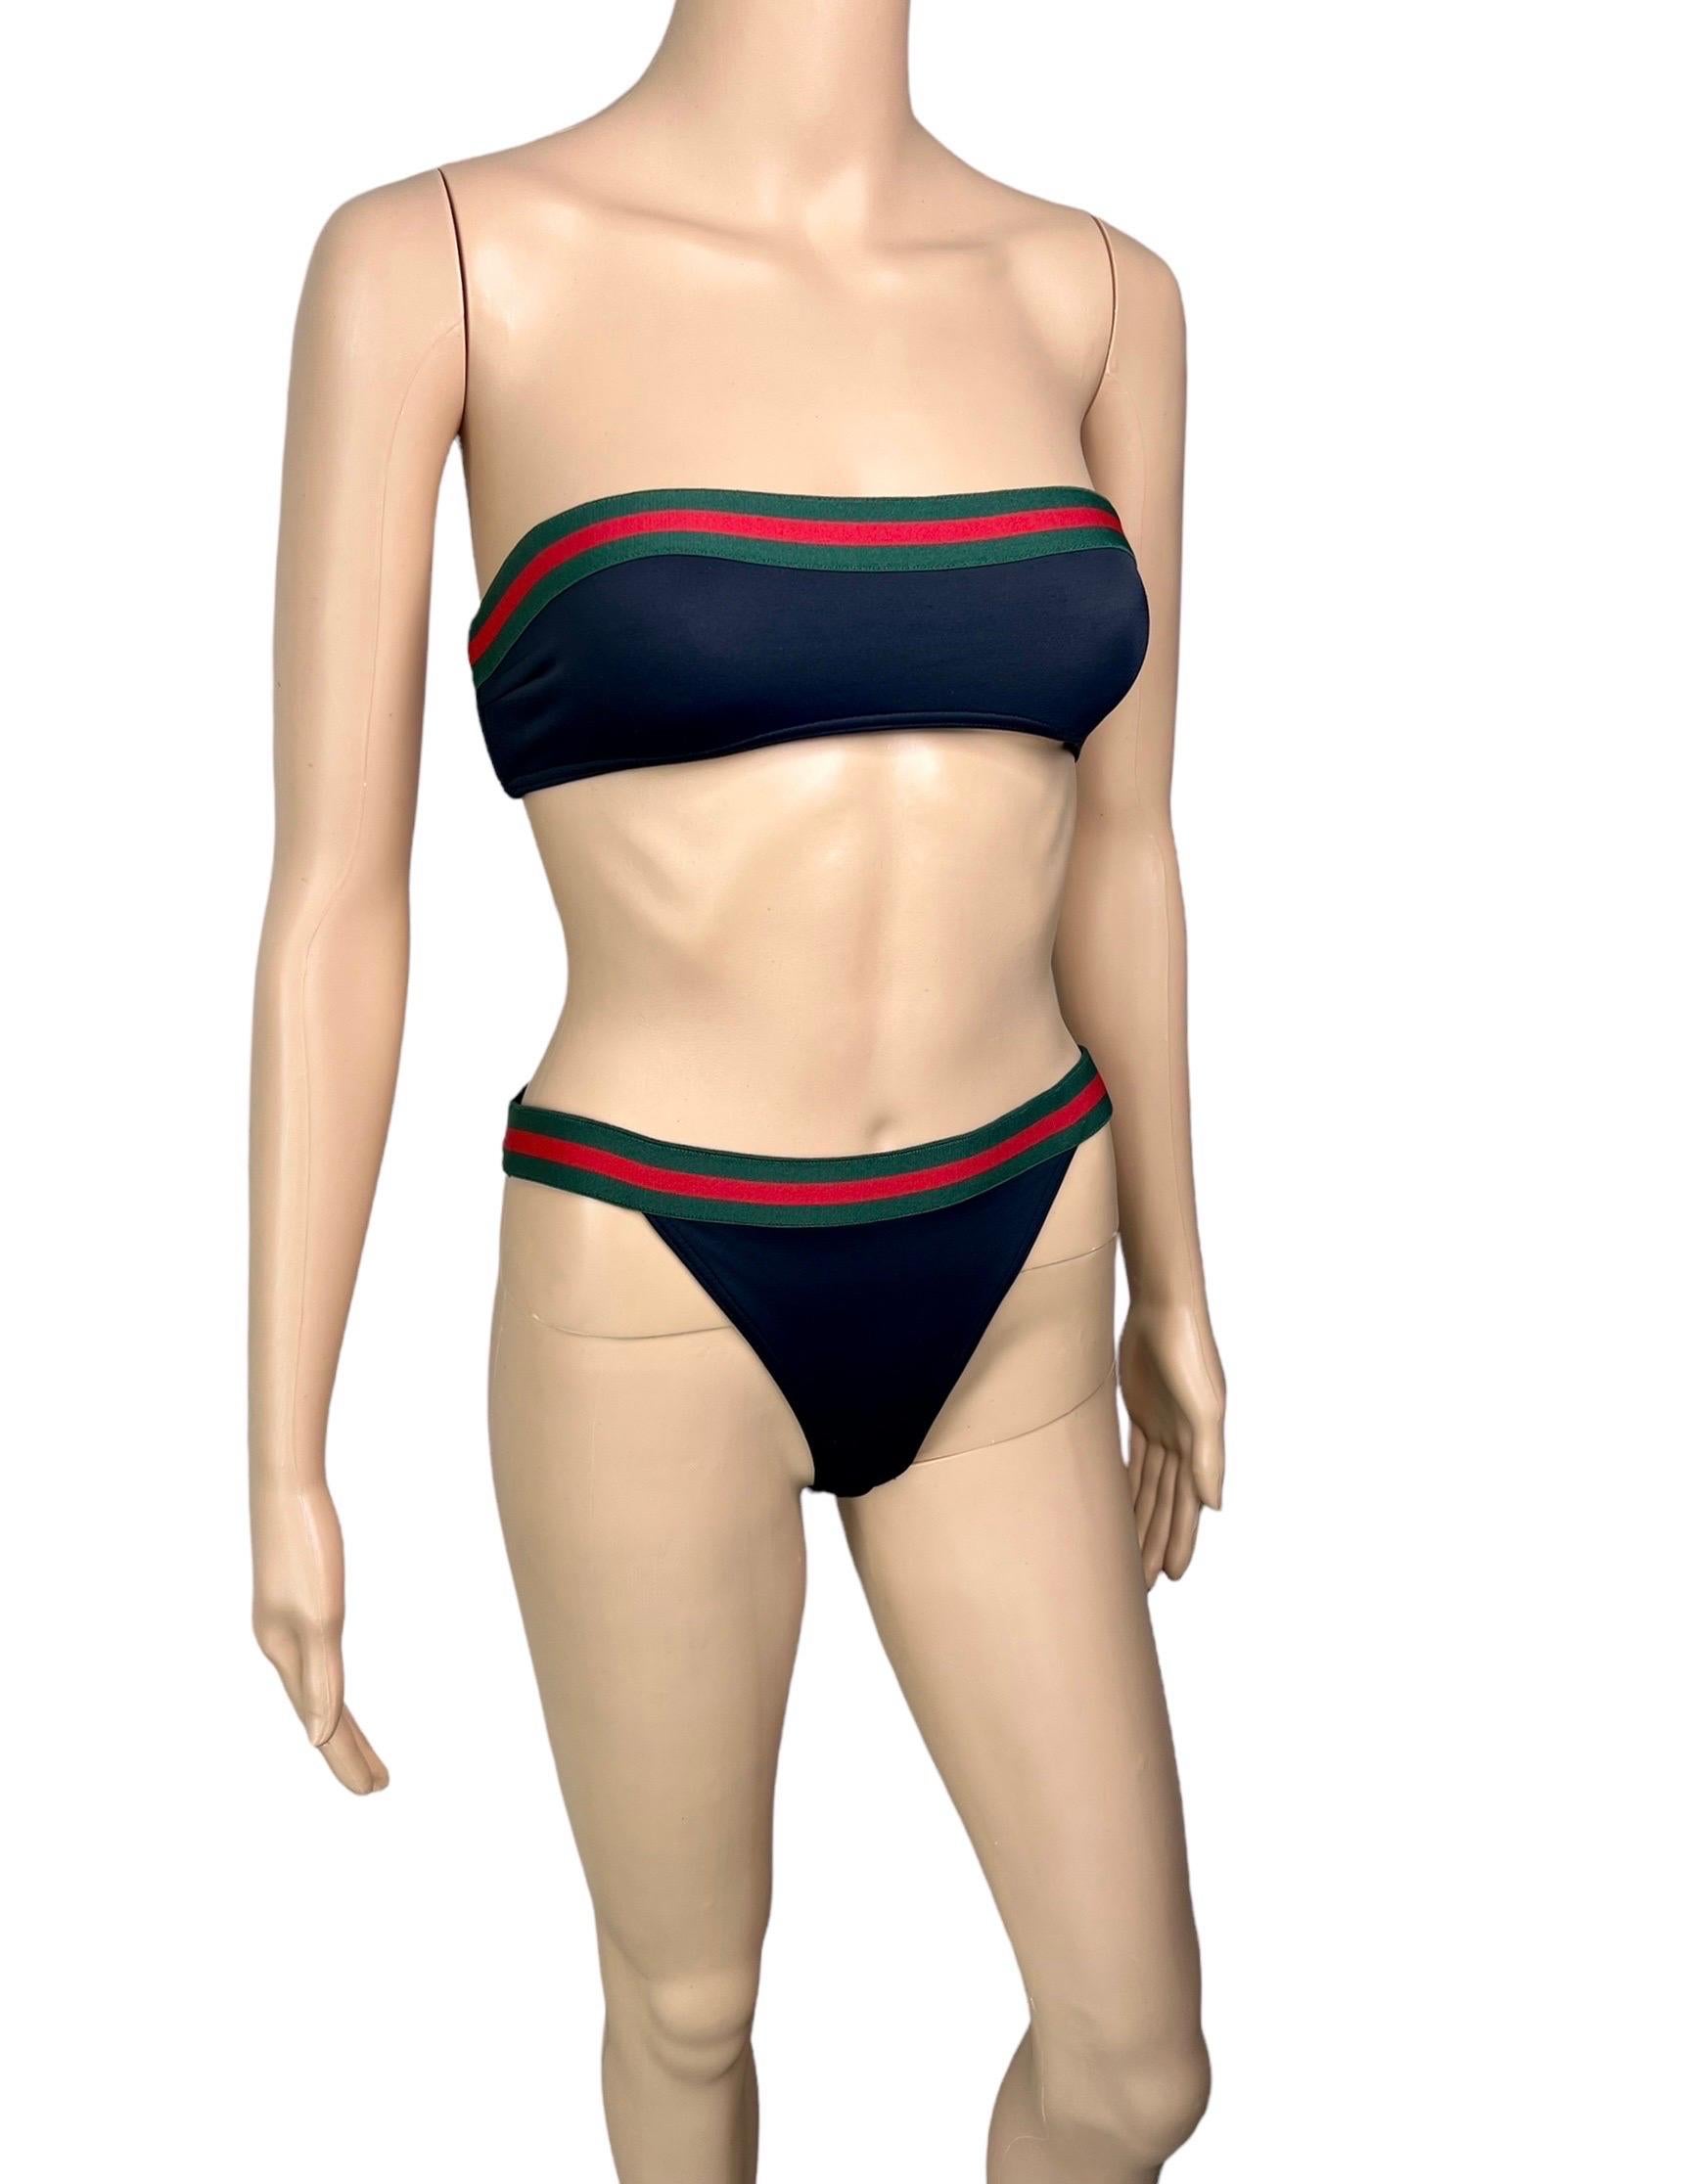 Tom Ford for Gucci S/S 1999 Strapless Bra & Bikini Two-Piece Swimwear Swimsuit For Sale 3